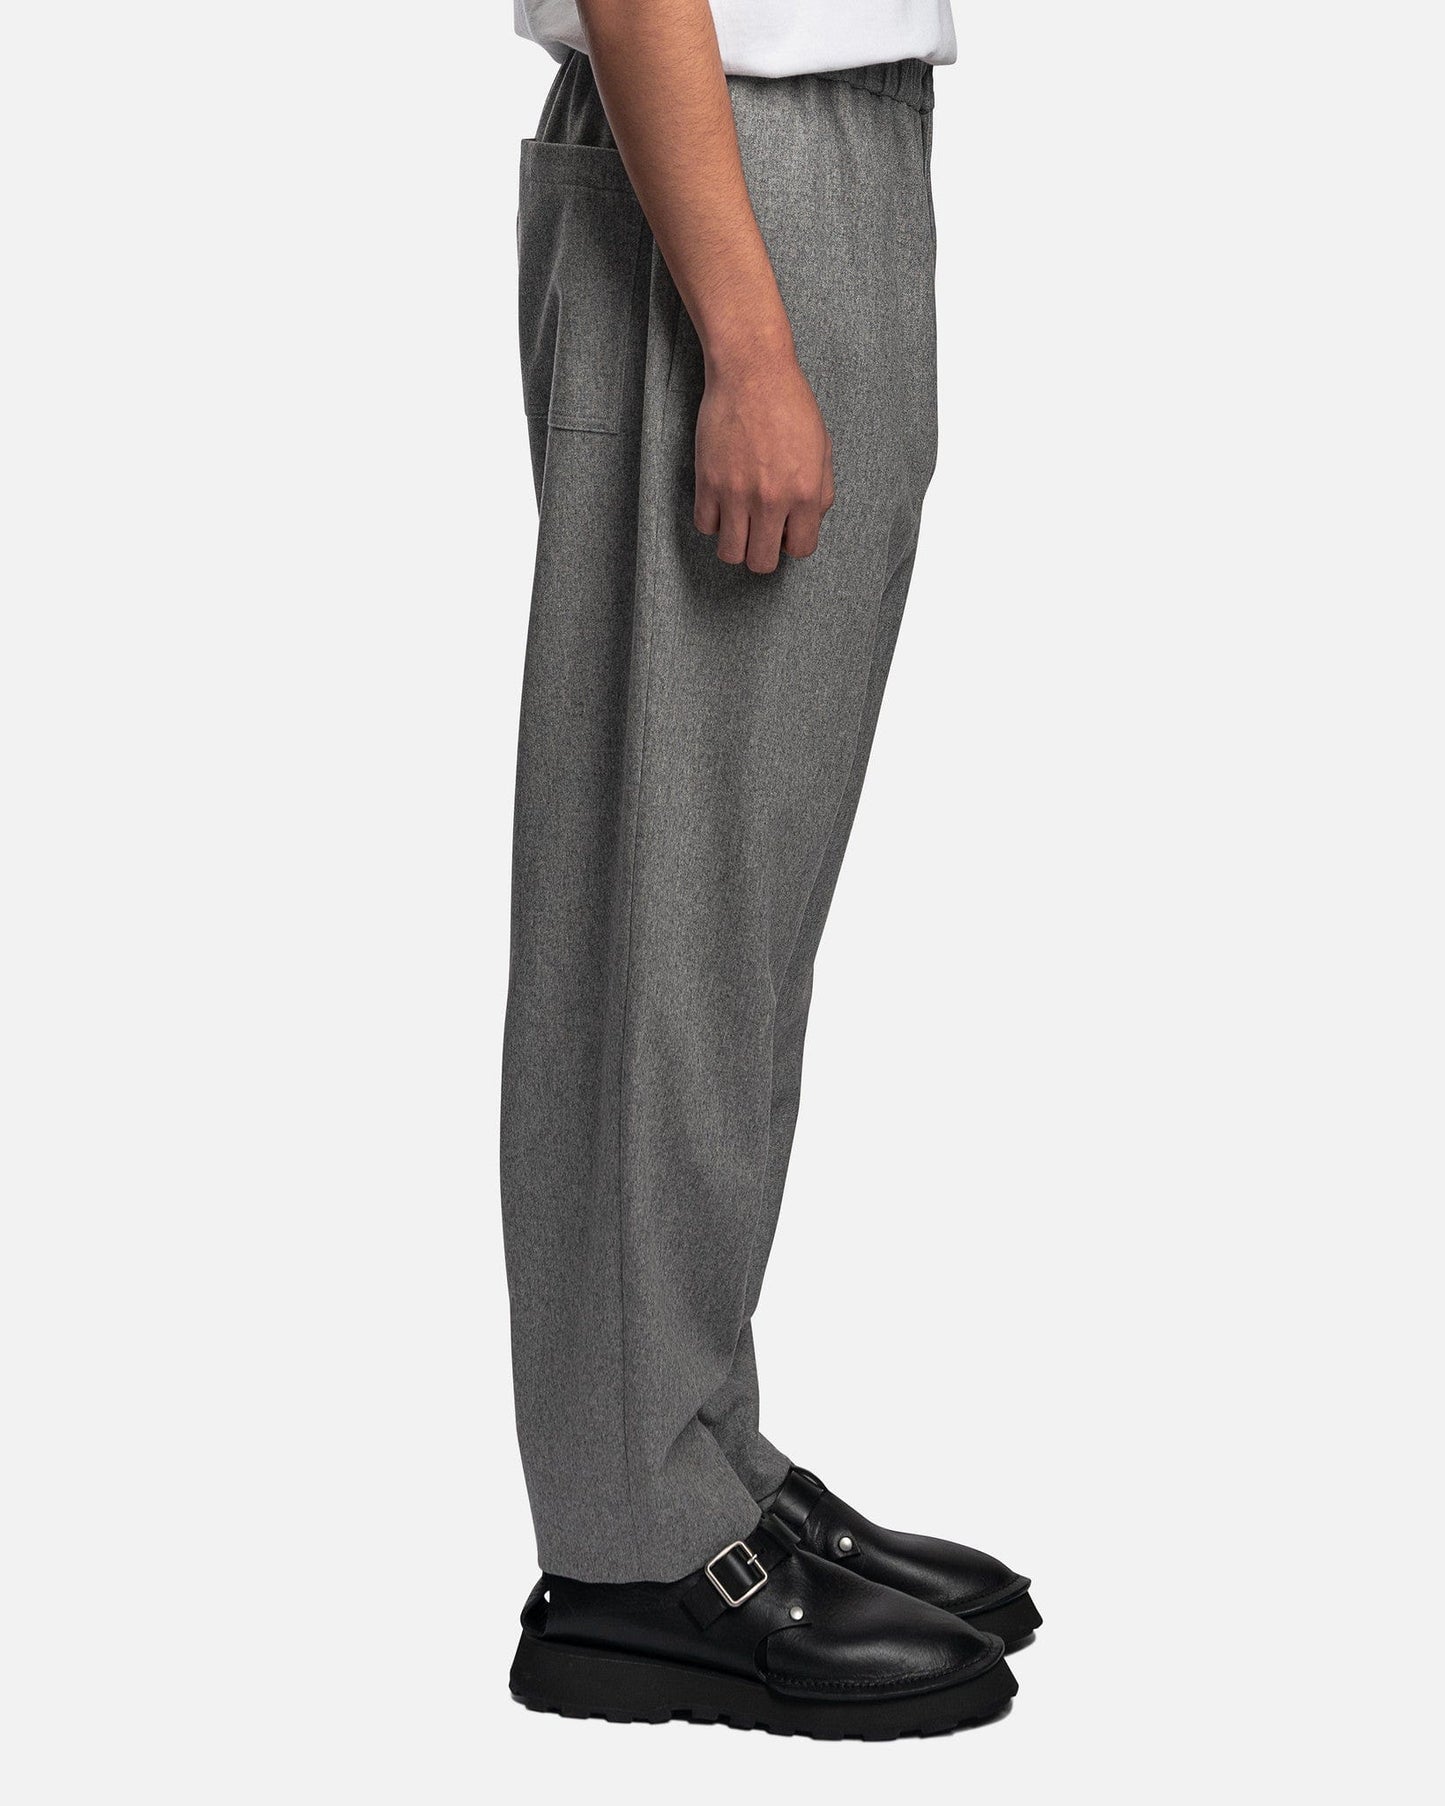 Jil Sander Men's Pants Non-Muesling Wool Flannel Trousers in Medium Grey